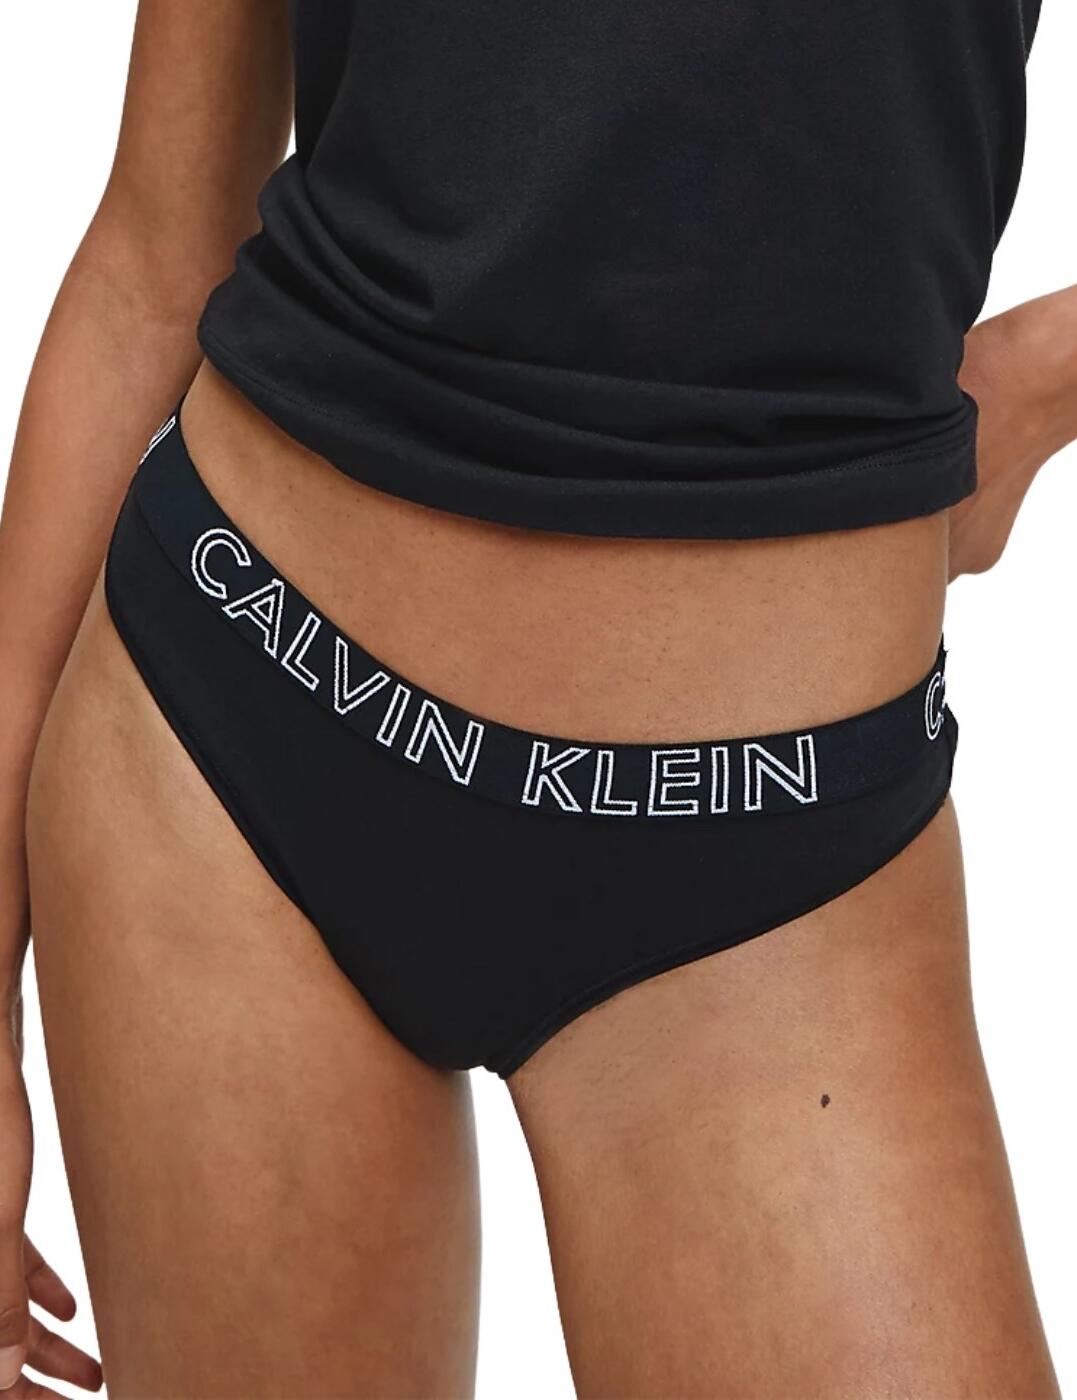 Calvin Klein Ultimate Cotton Brief in Black